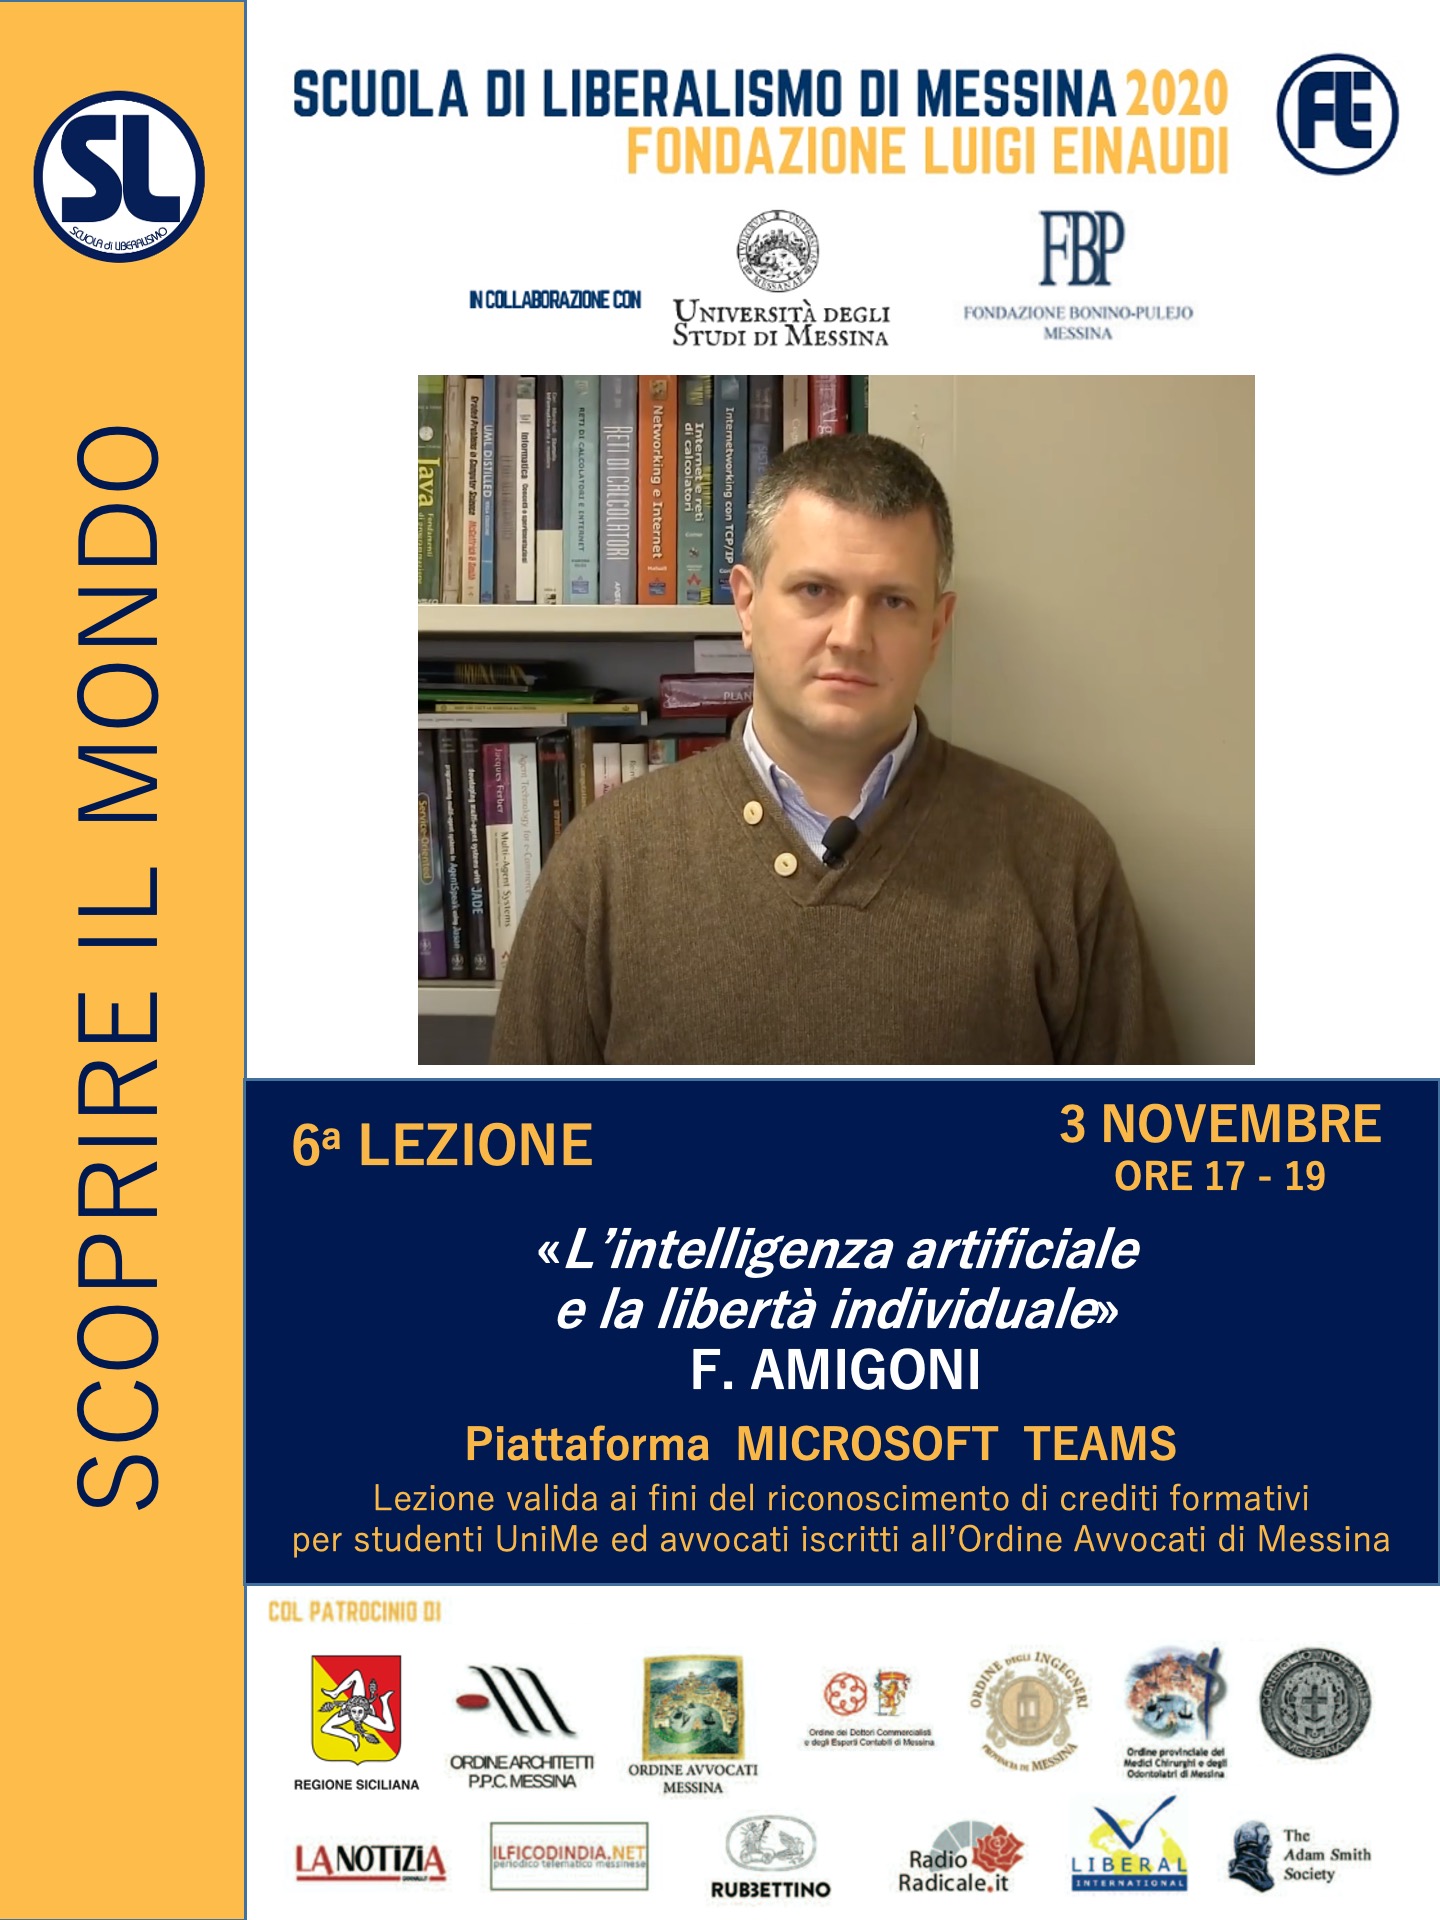 Messina, November 3, 2020. School of Liberalism: Francesco Amigoni gives the lecture